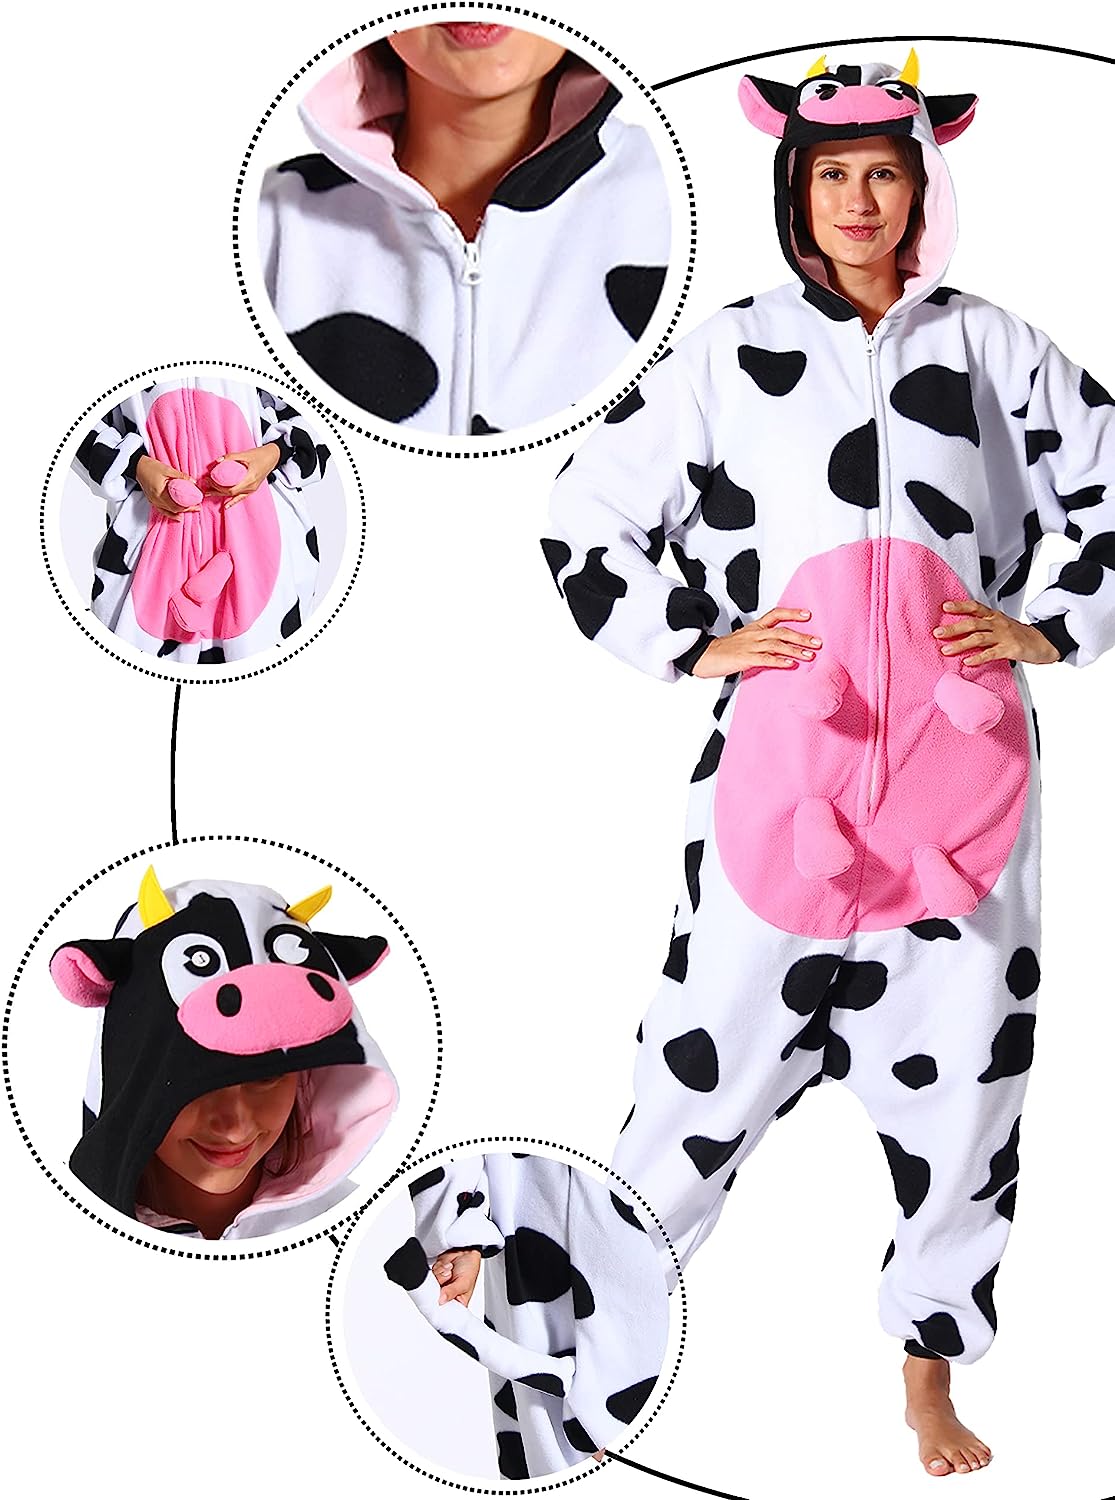 Adult Cow One-Piece Pajamas Animal Cosplay Halloween Costume